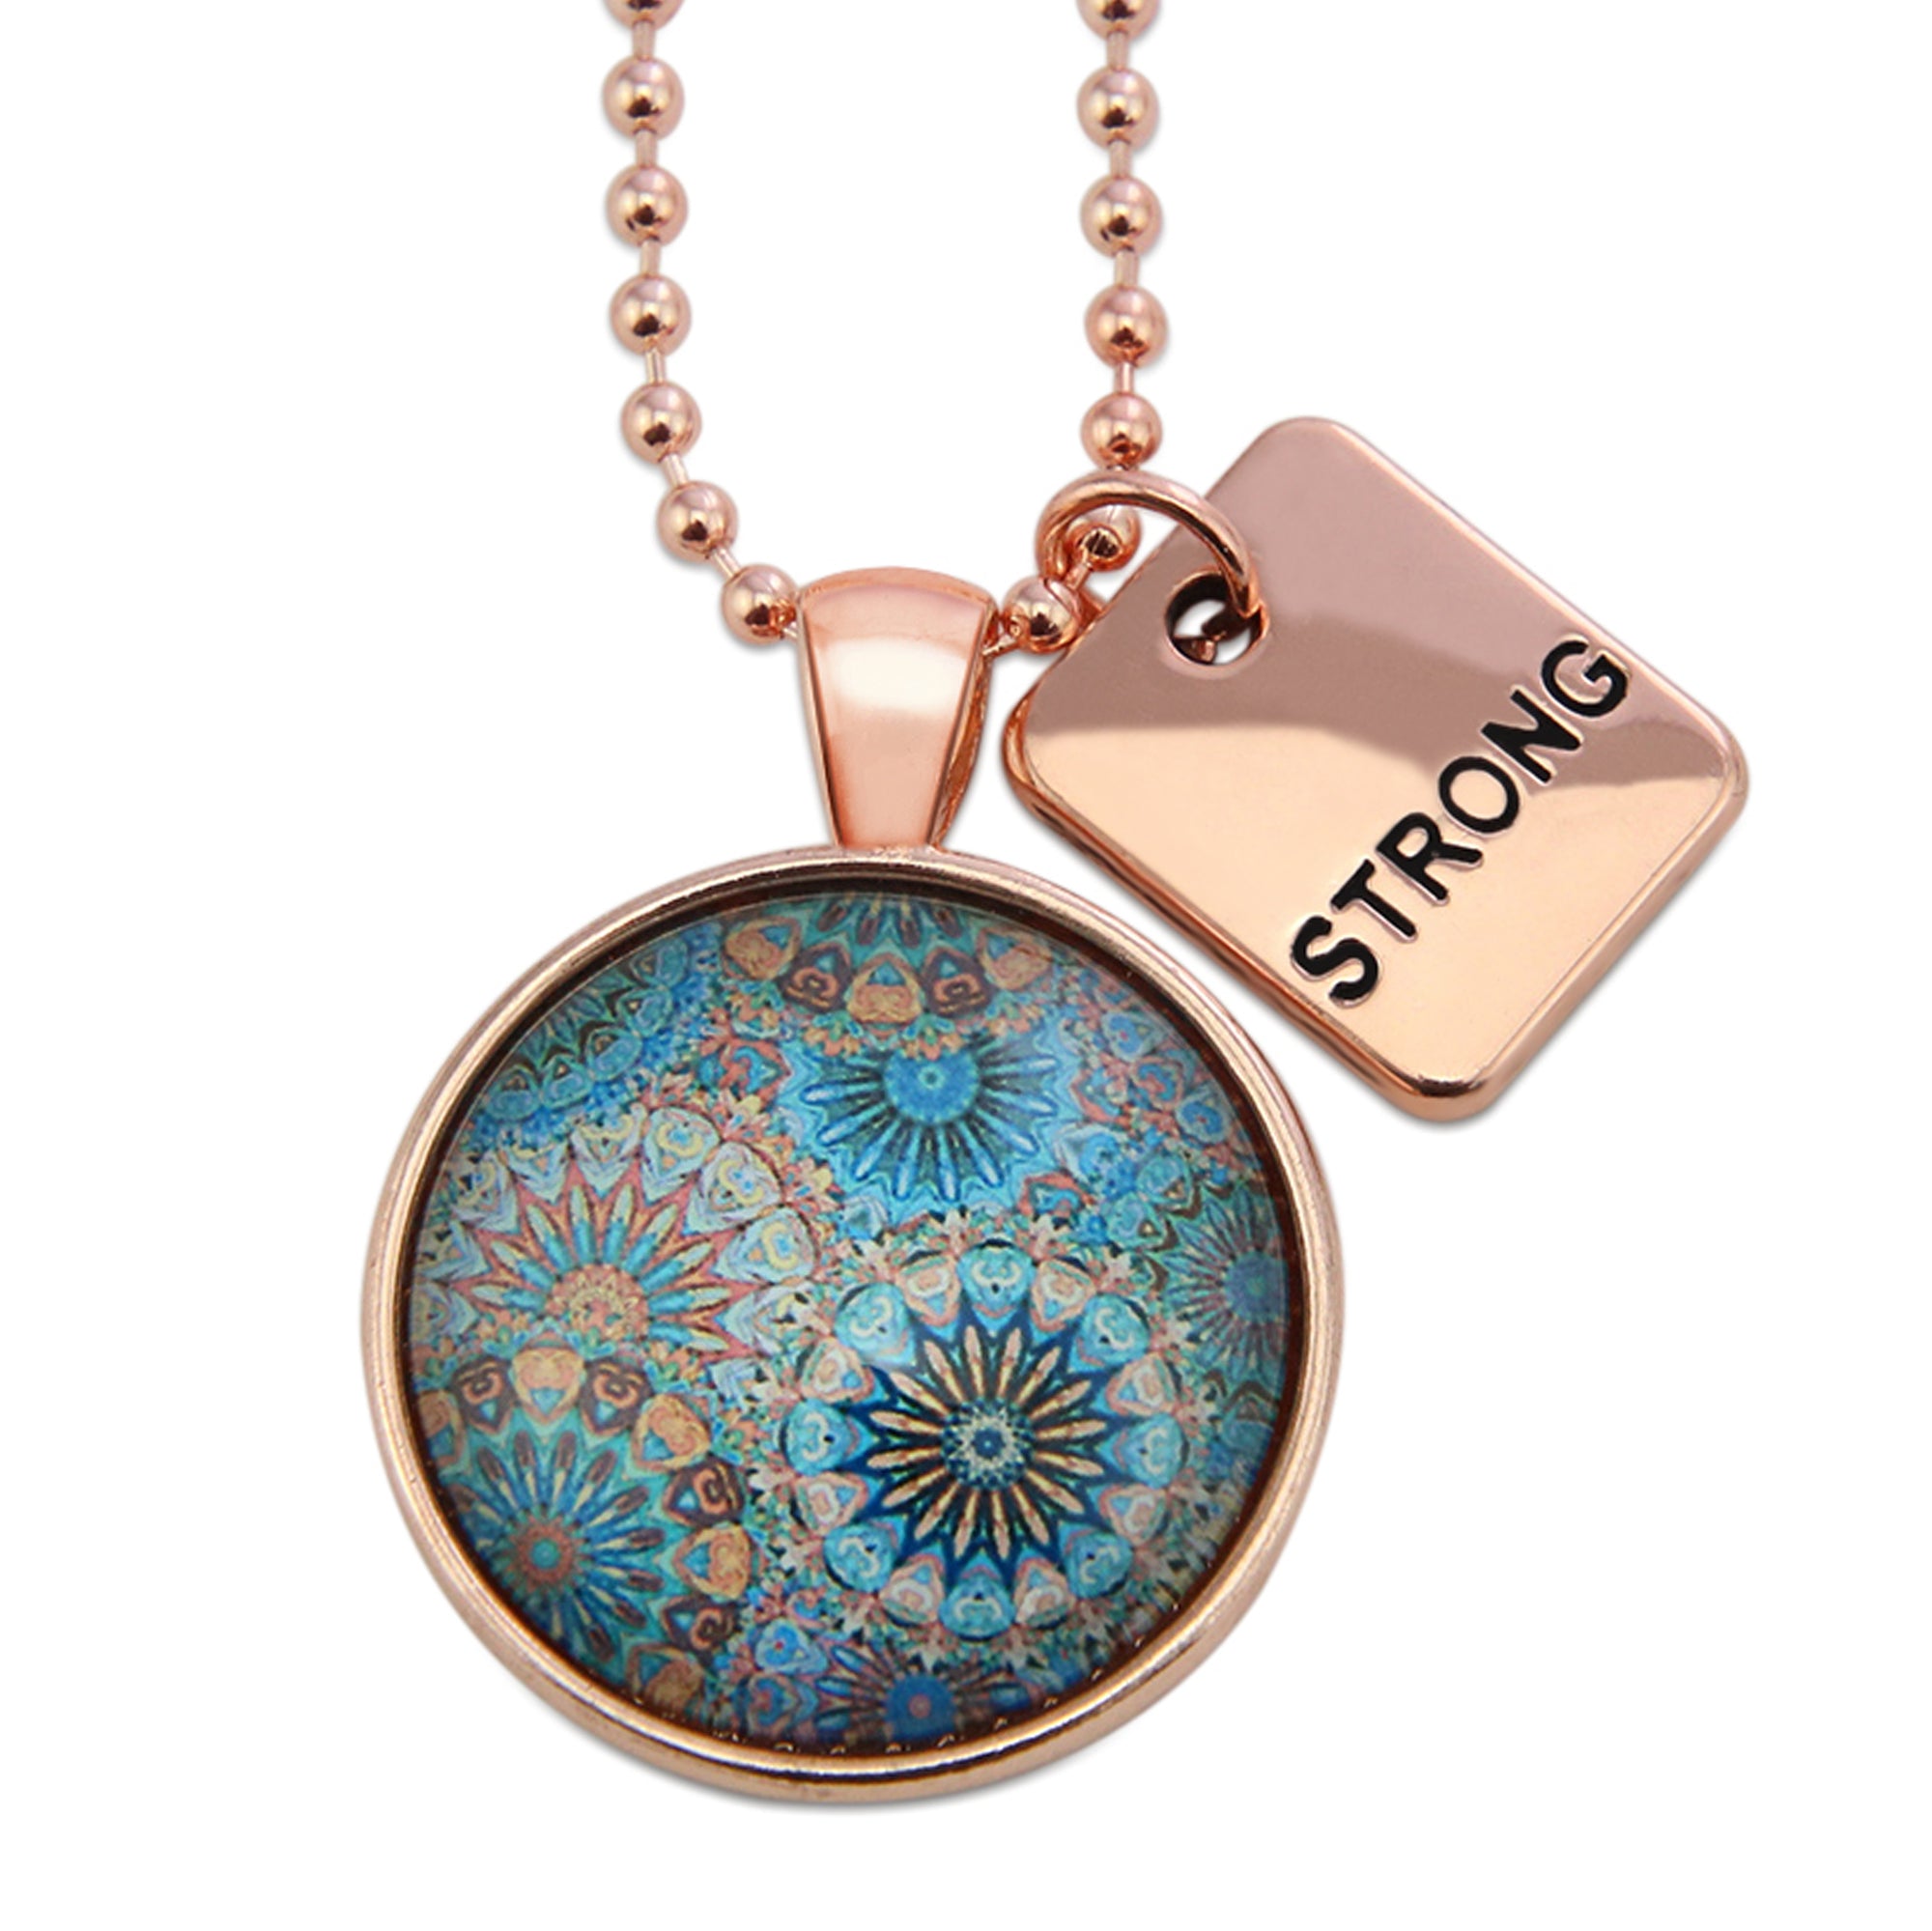 Teal mandala print rose gold pendant necklace with grateful charm. 